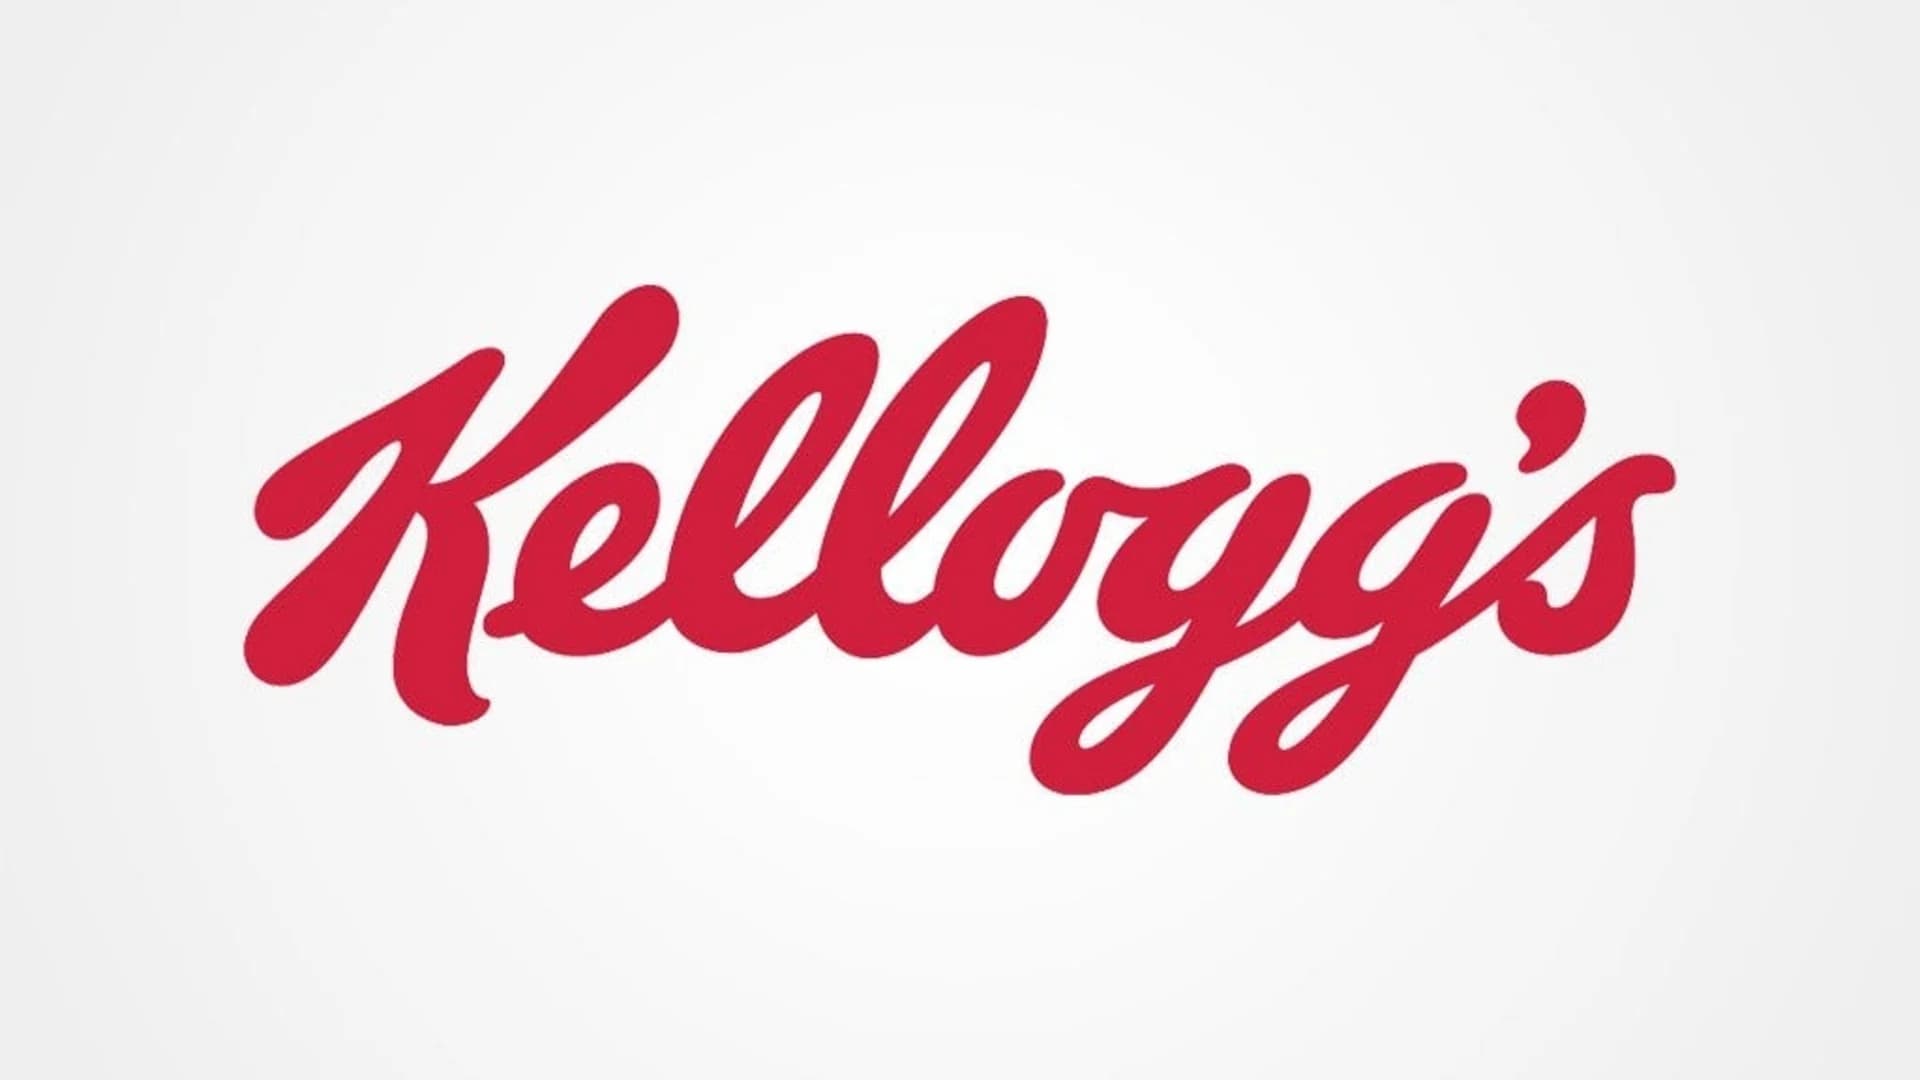 Kellogg recalls Honey Smacks because of salmonella potential